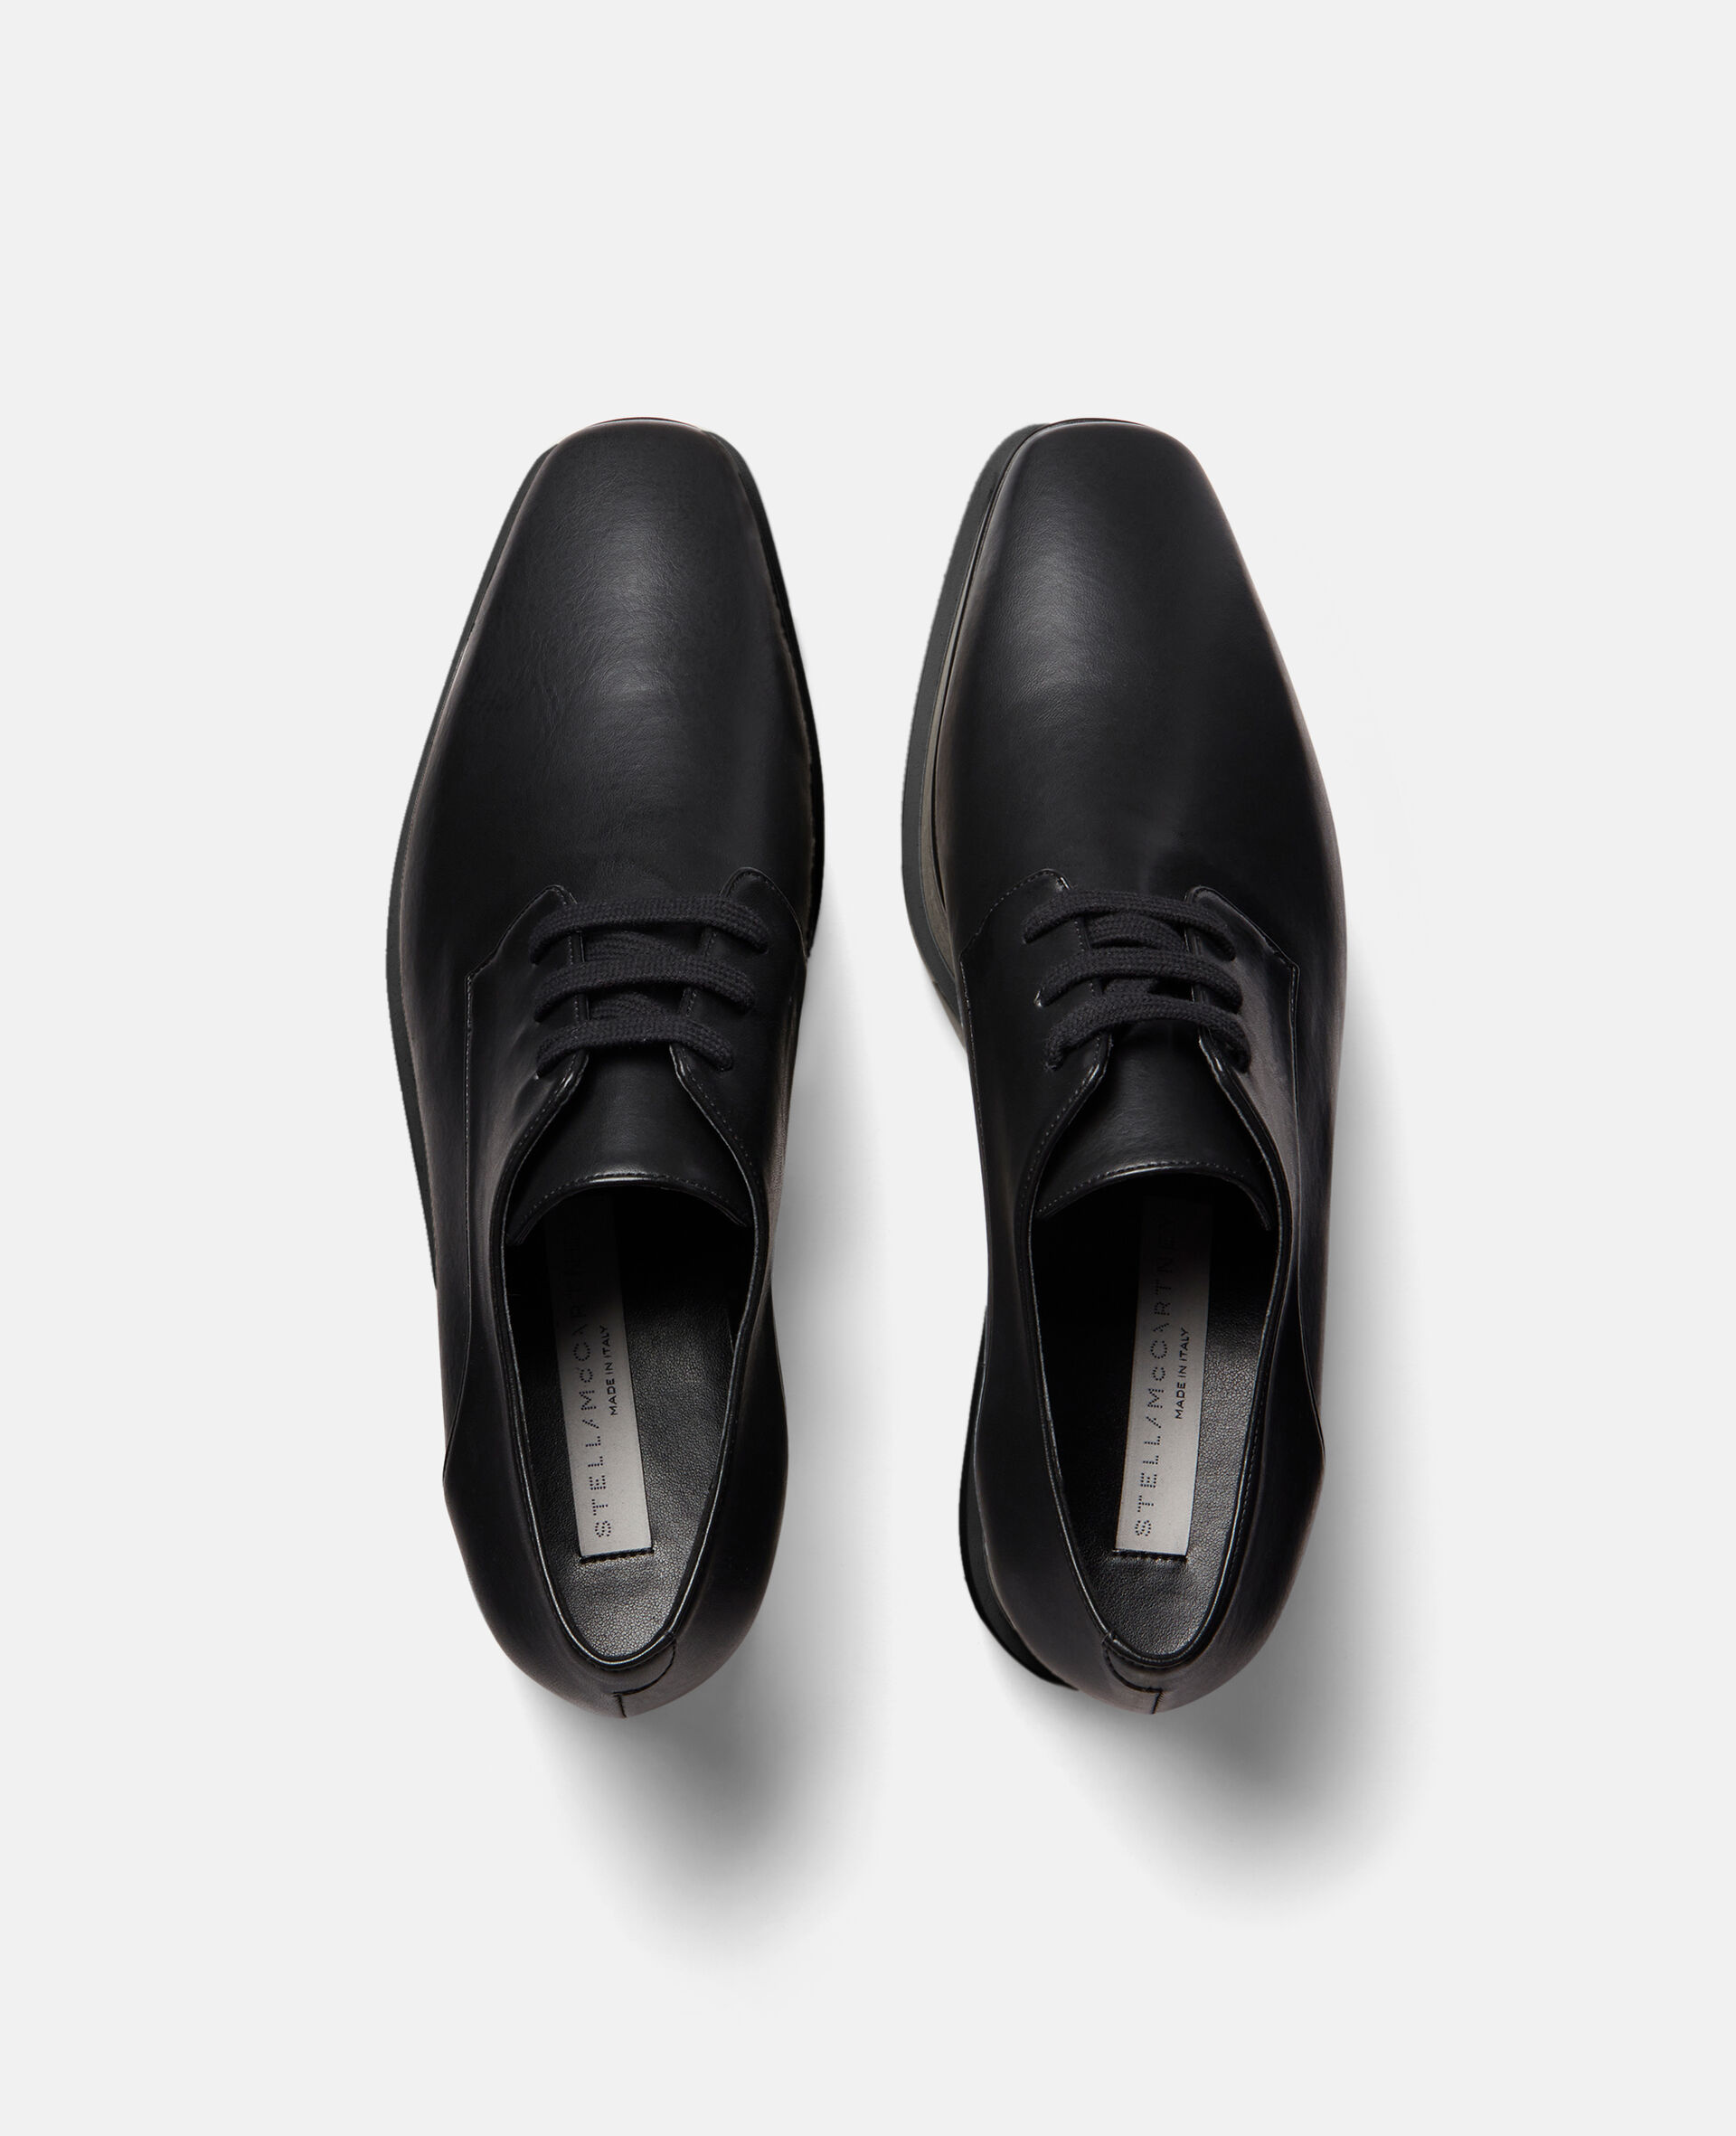 Chaussures compensees Elyse avec logo-Noir-large image number 3